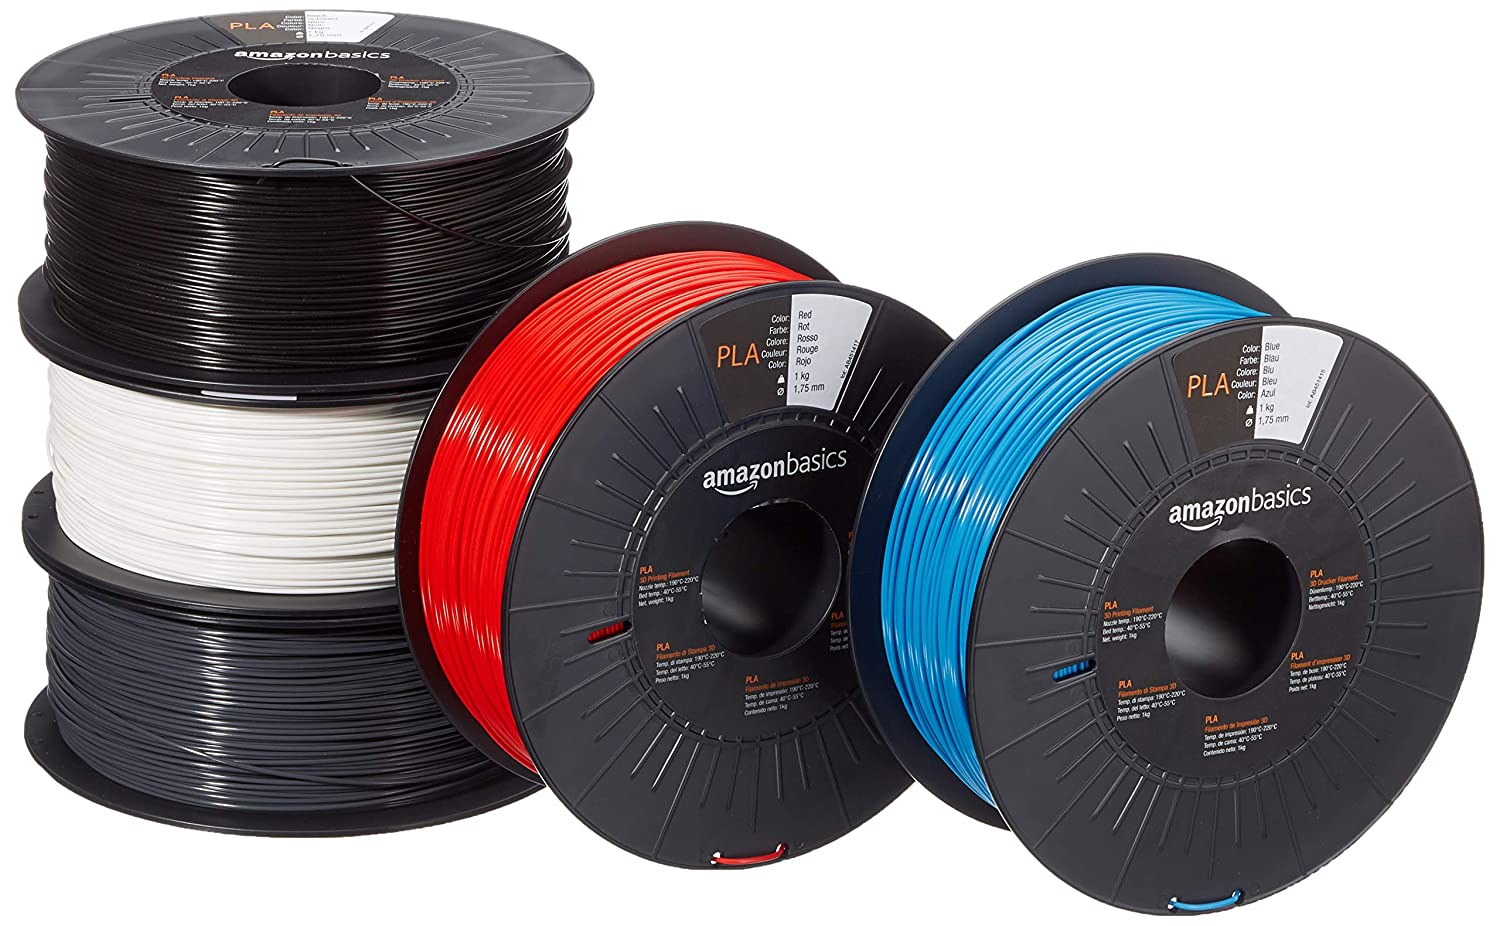 AmazonBasics - Filamento per stampanti 3D, 1,75 mm, 5 colori assortiti, 1 kg per bobina, 5 bobine